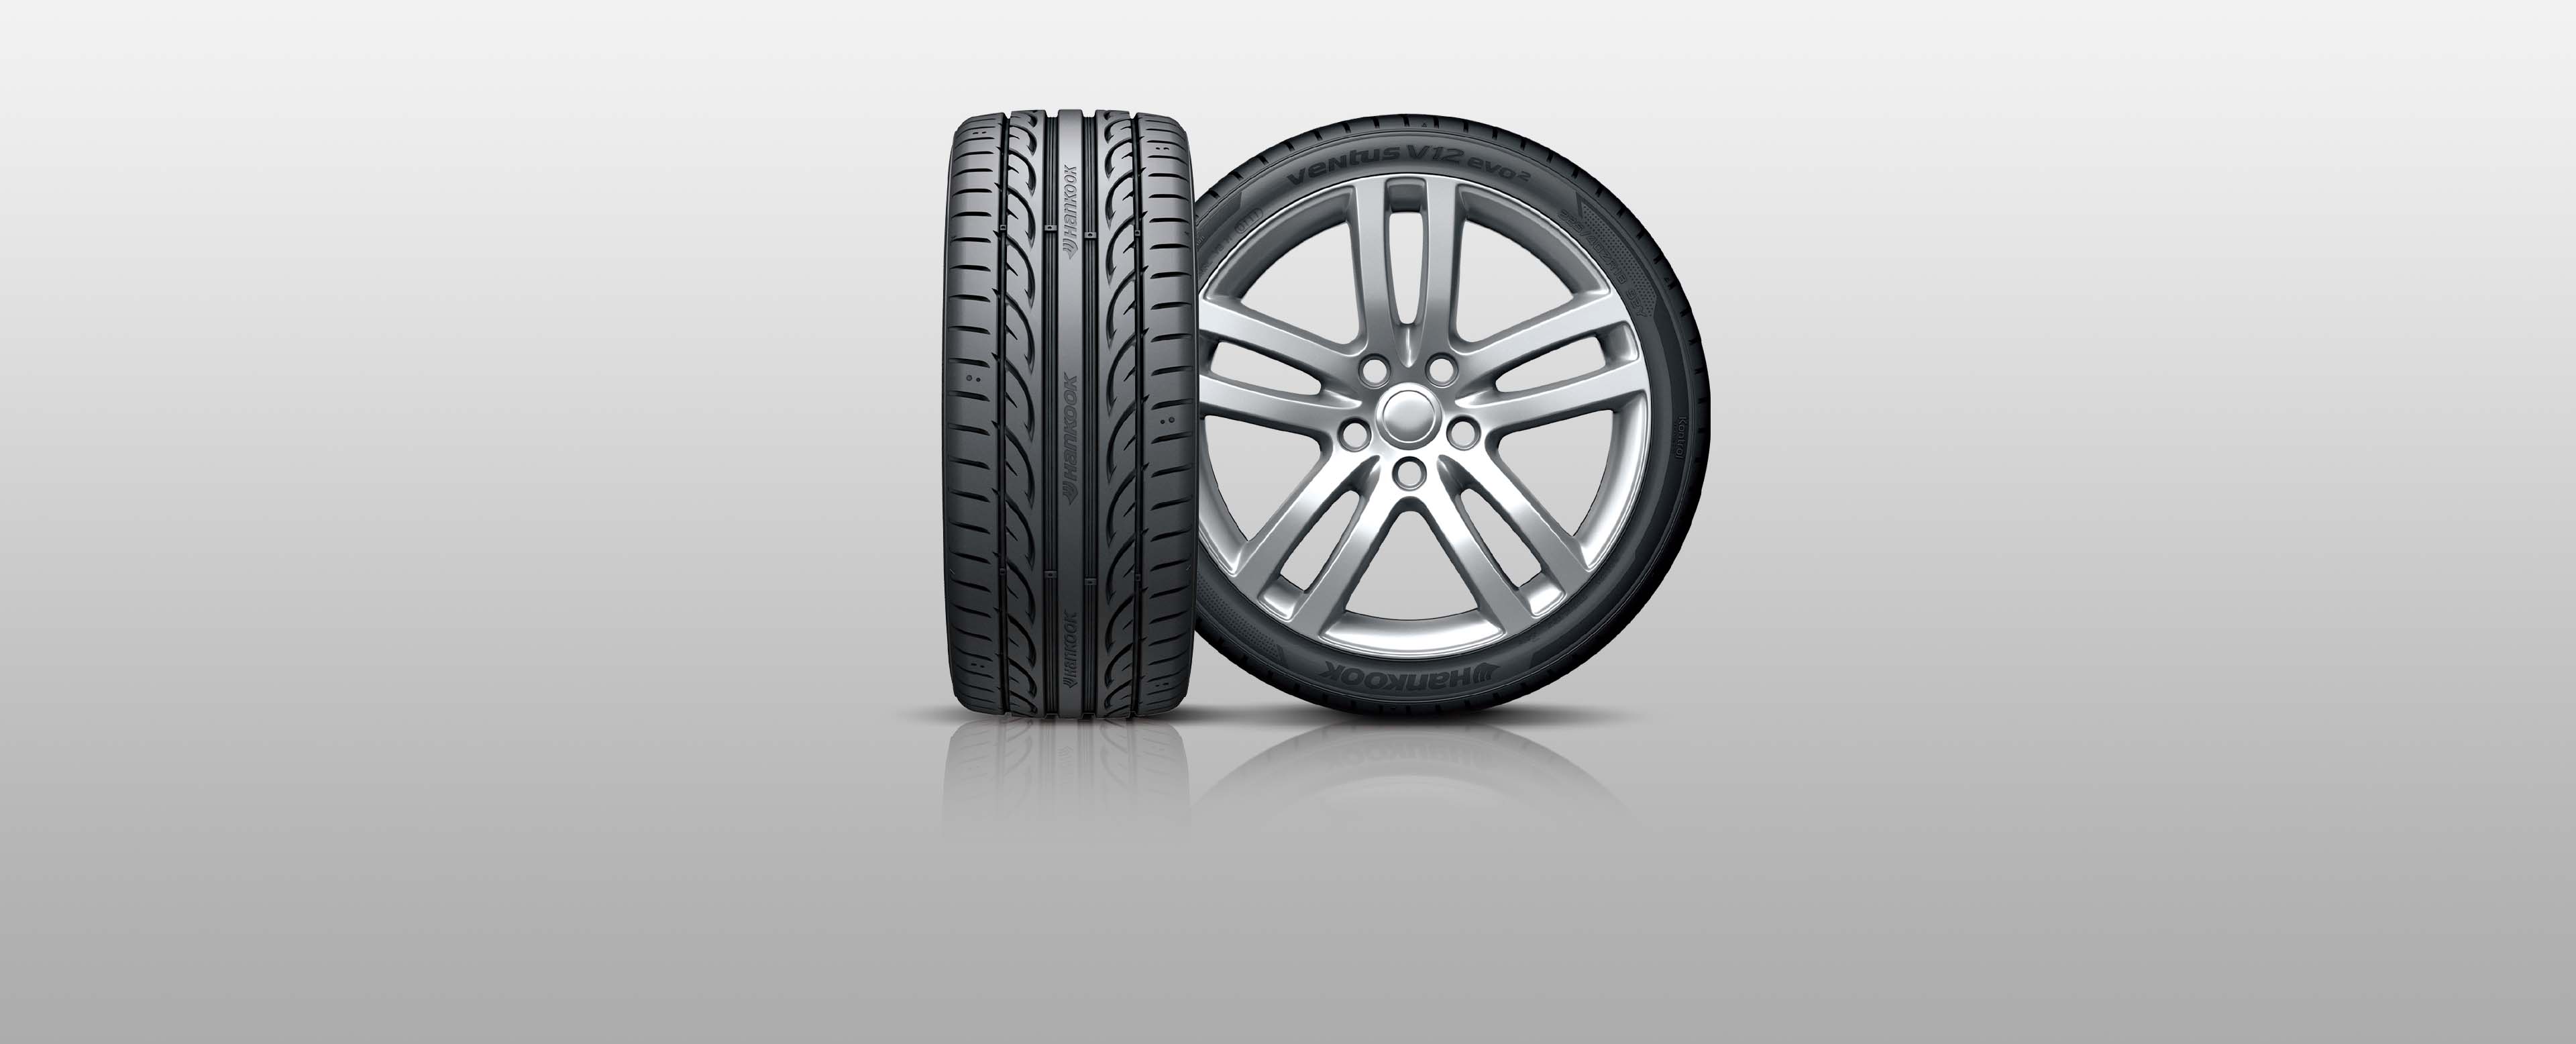 Hankook Tire & Technology-Tires-Ventus-Ventus V12 evo2-K120-Extreme running